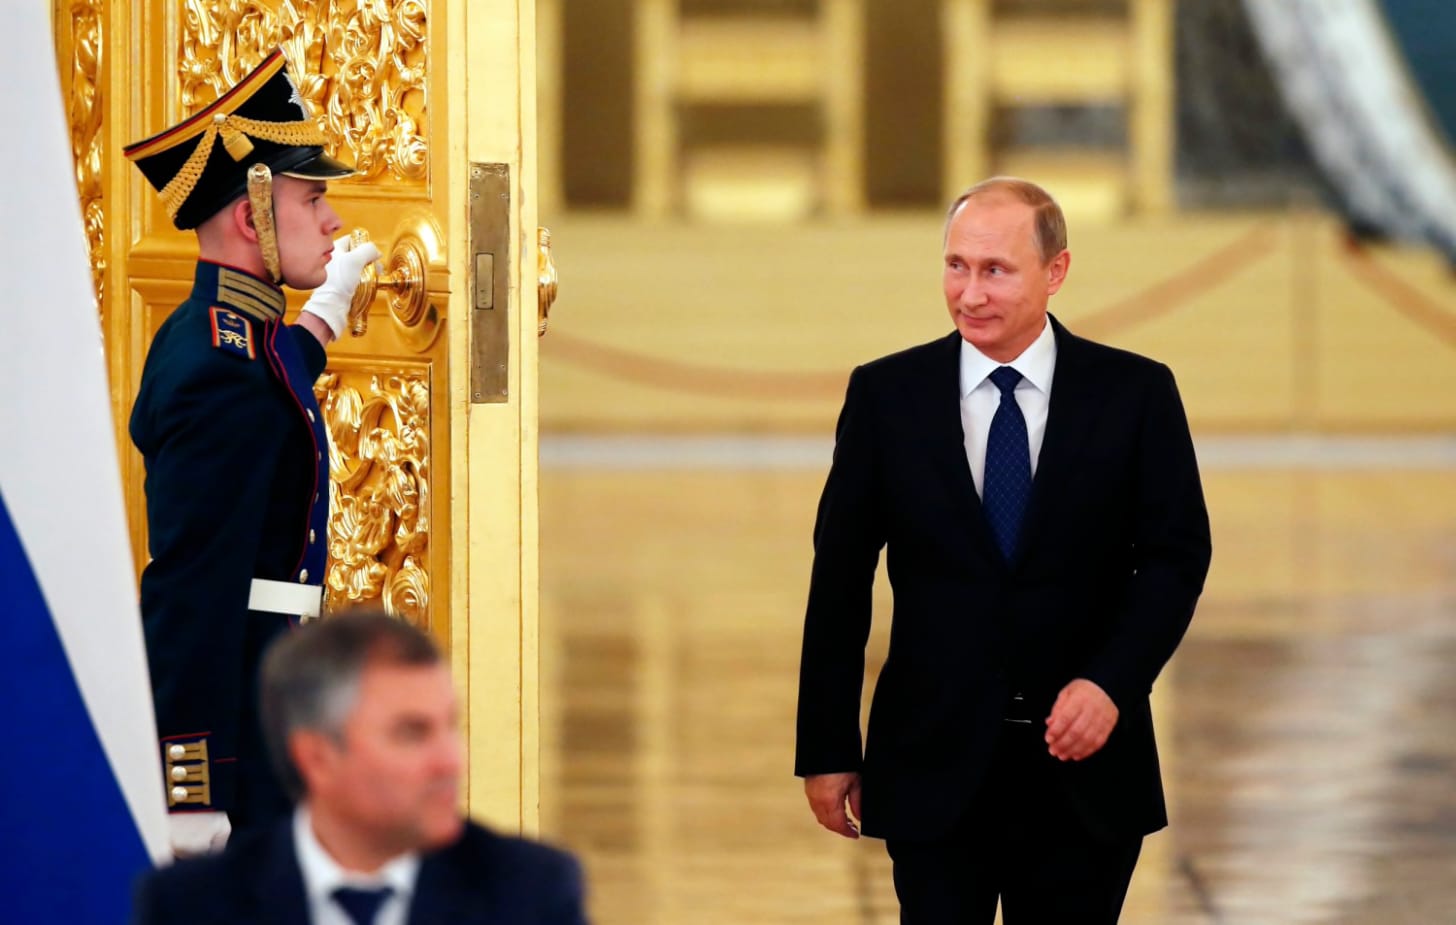 Why Does Vladimir Putin Walk Like That?